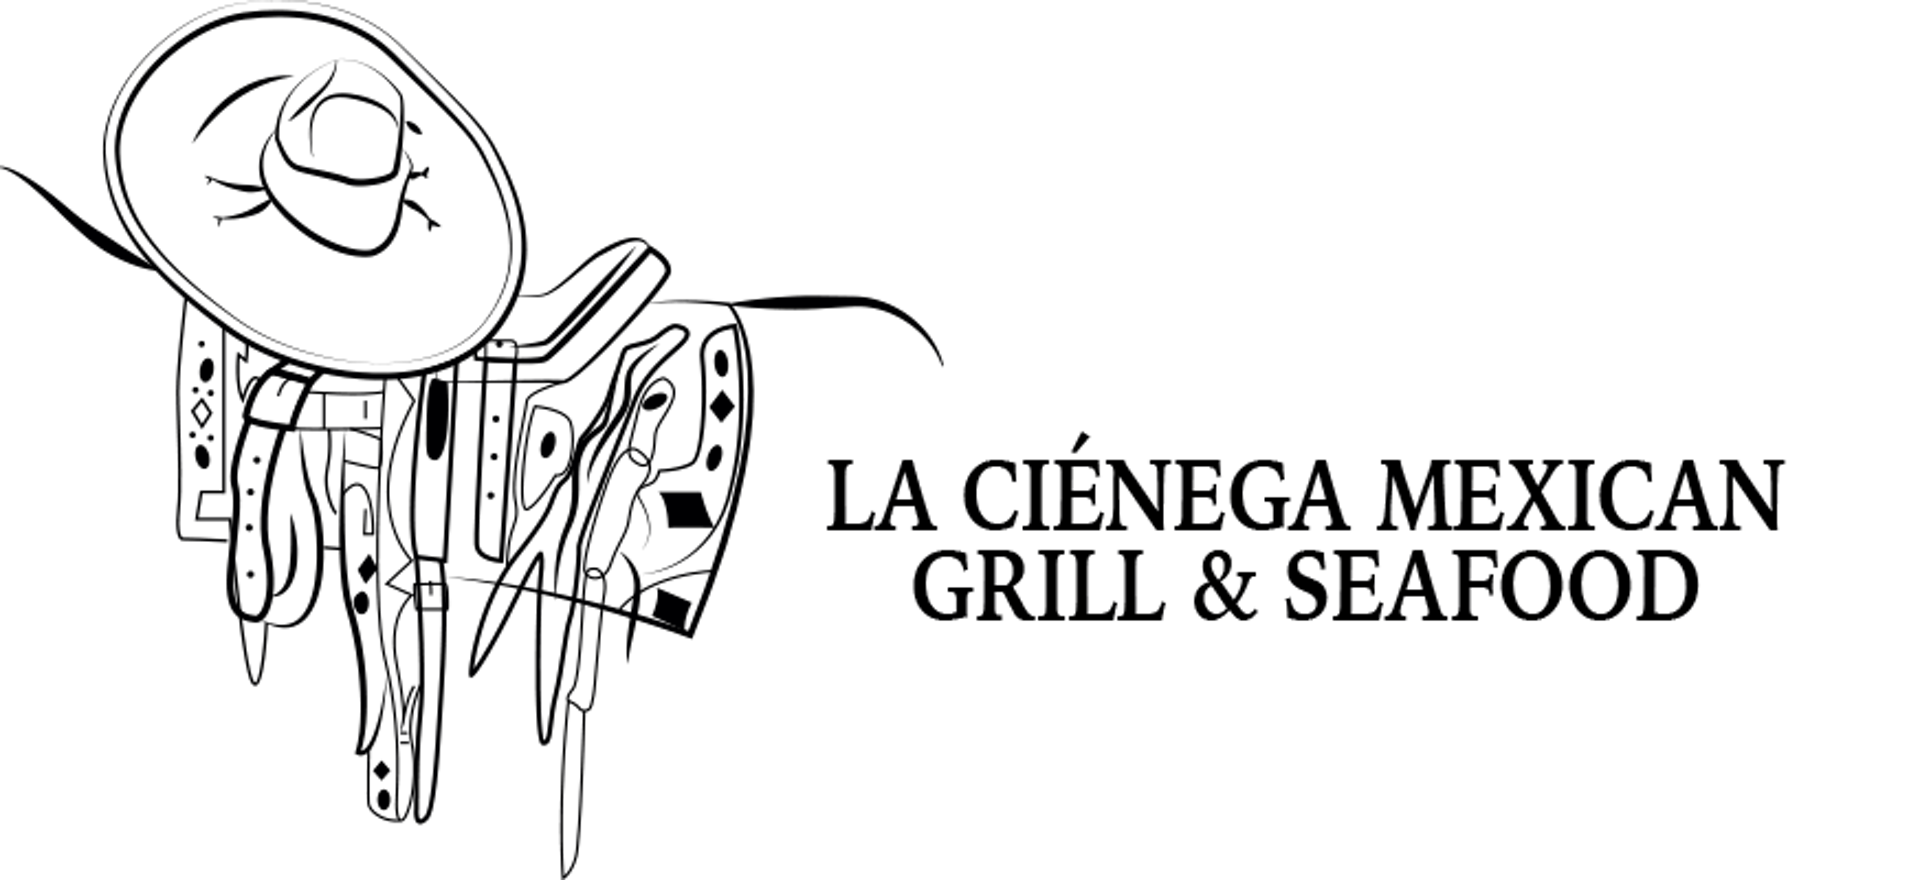 La Cienega Mexican Grill